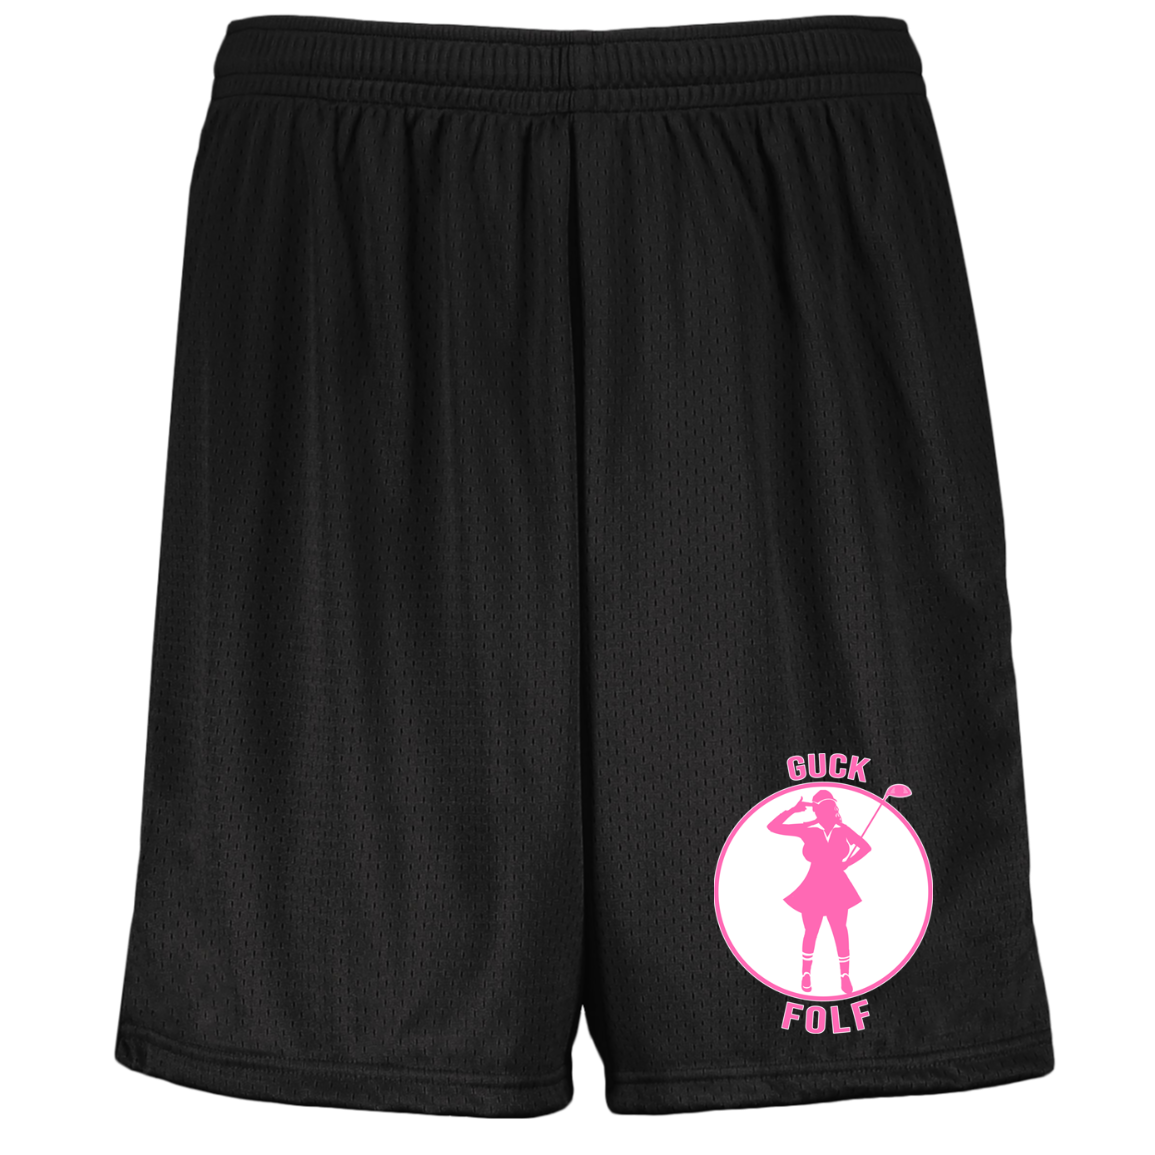 OPG Custom Design #19. GUCK FOLF. Female Edition. Youth Moisture-Wicking Mesh Shorts